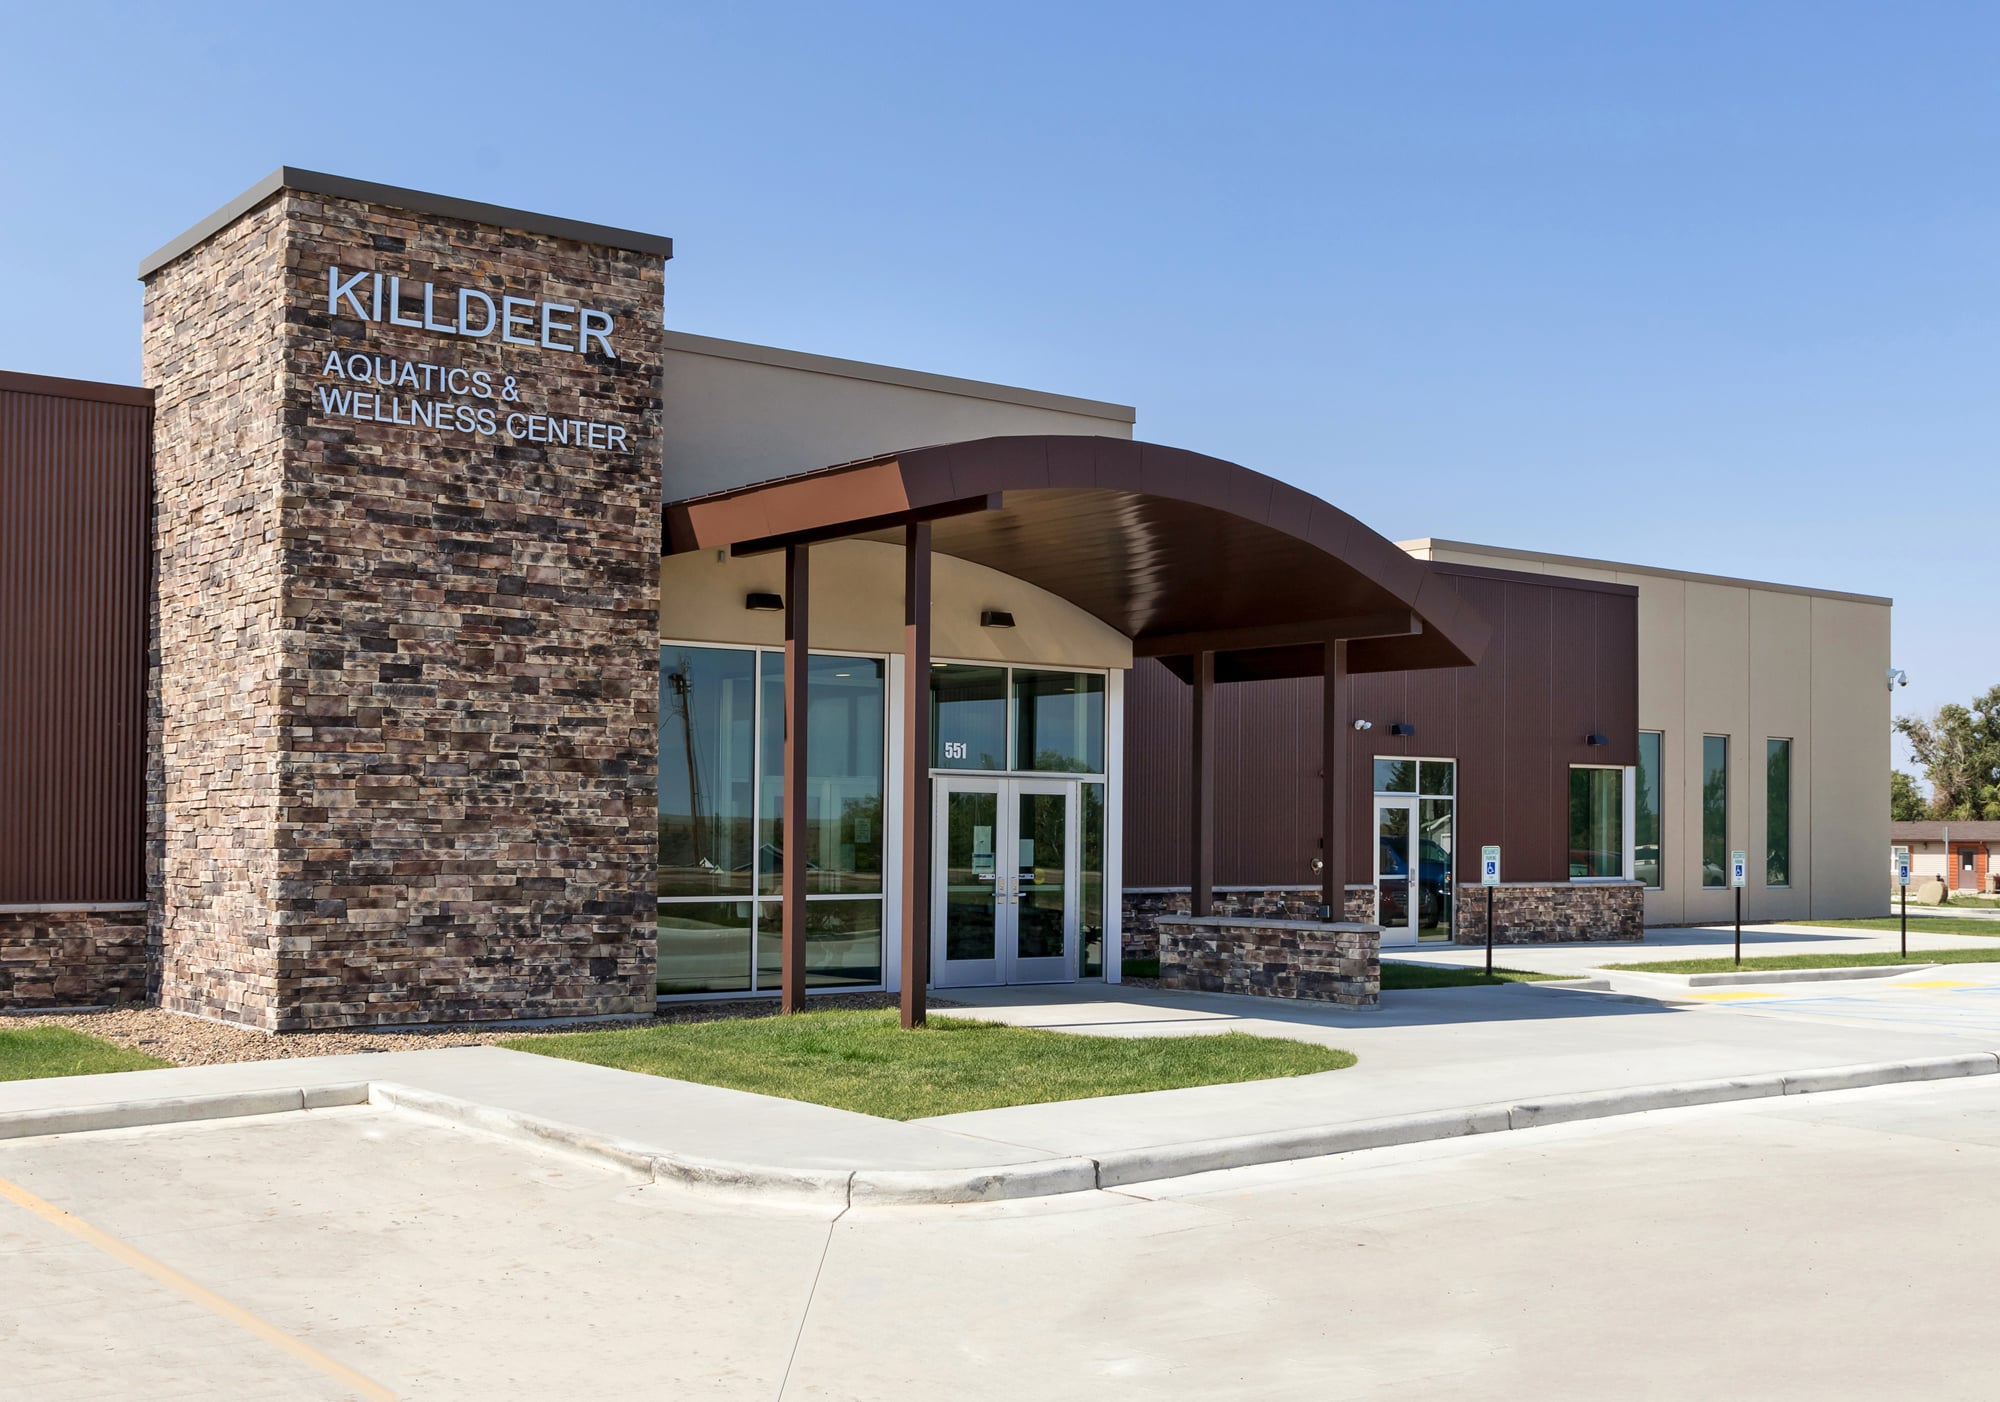 Killdeer Aquatics and Wellness Center